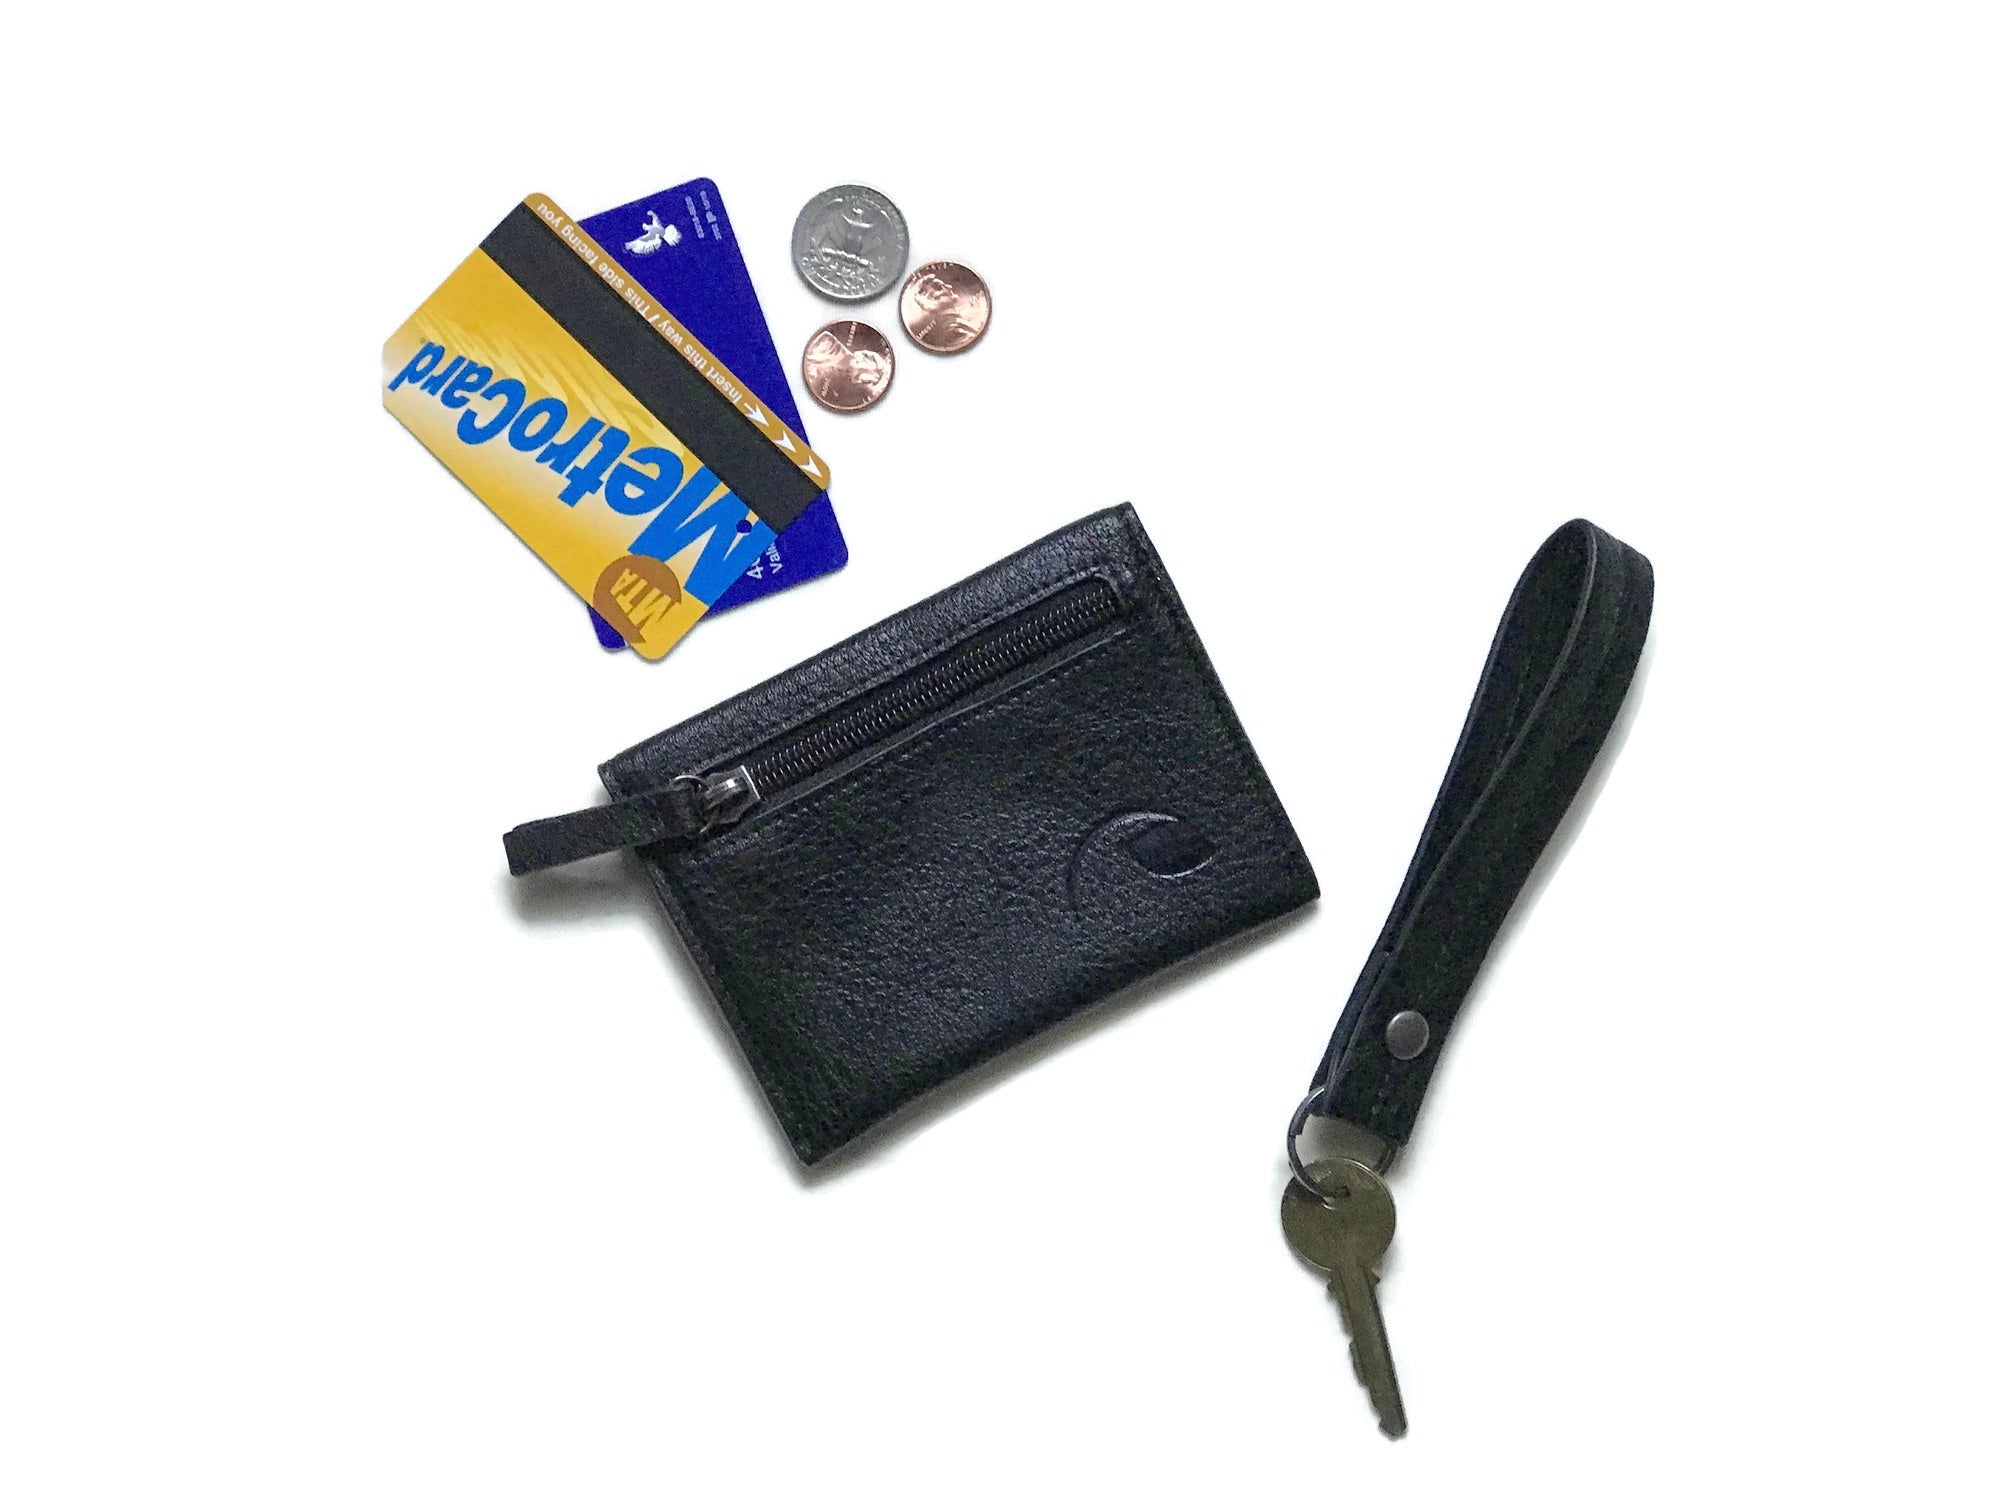 Chic Vegan Duo: Coin Wallet & Keychain Wristlet Gift Set (Minimalist, Eco-Friendly, Black & Rose Gold)